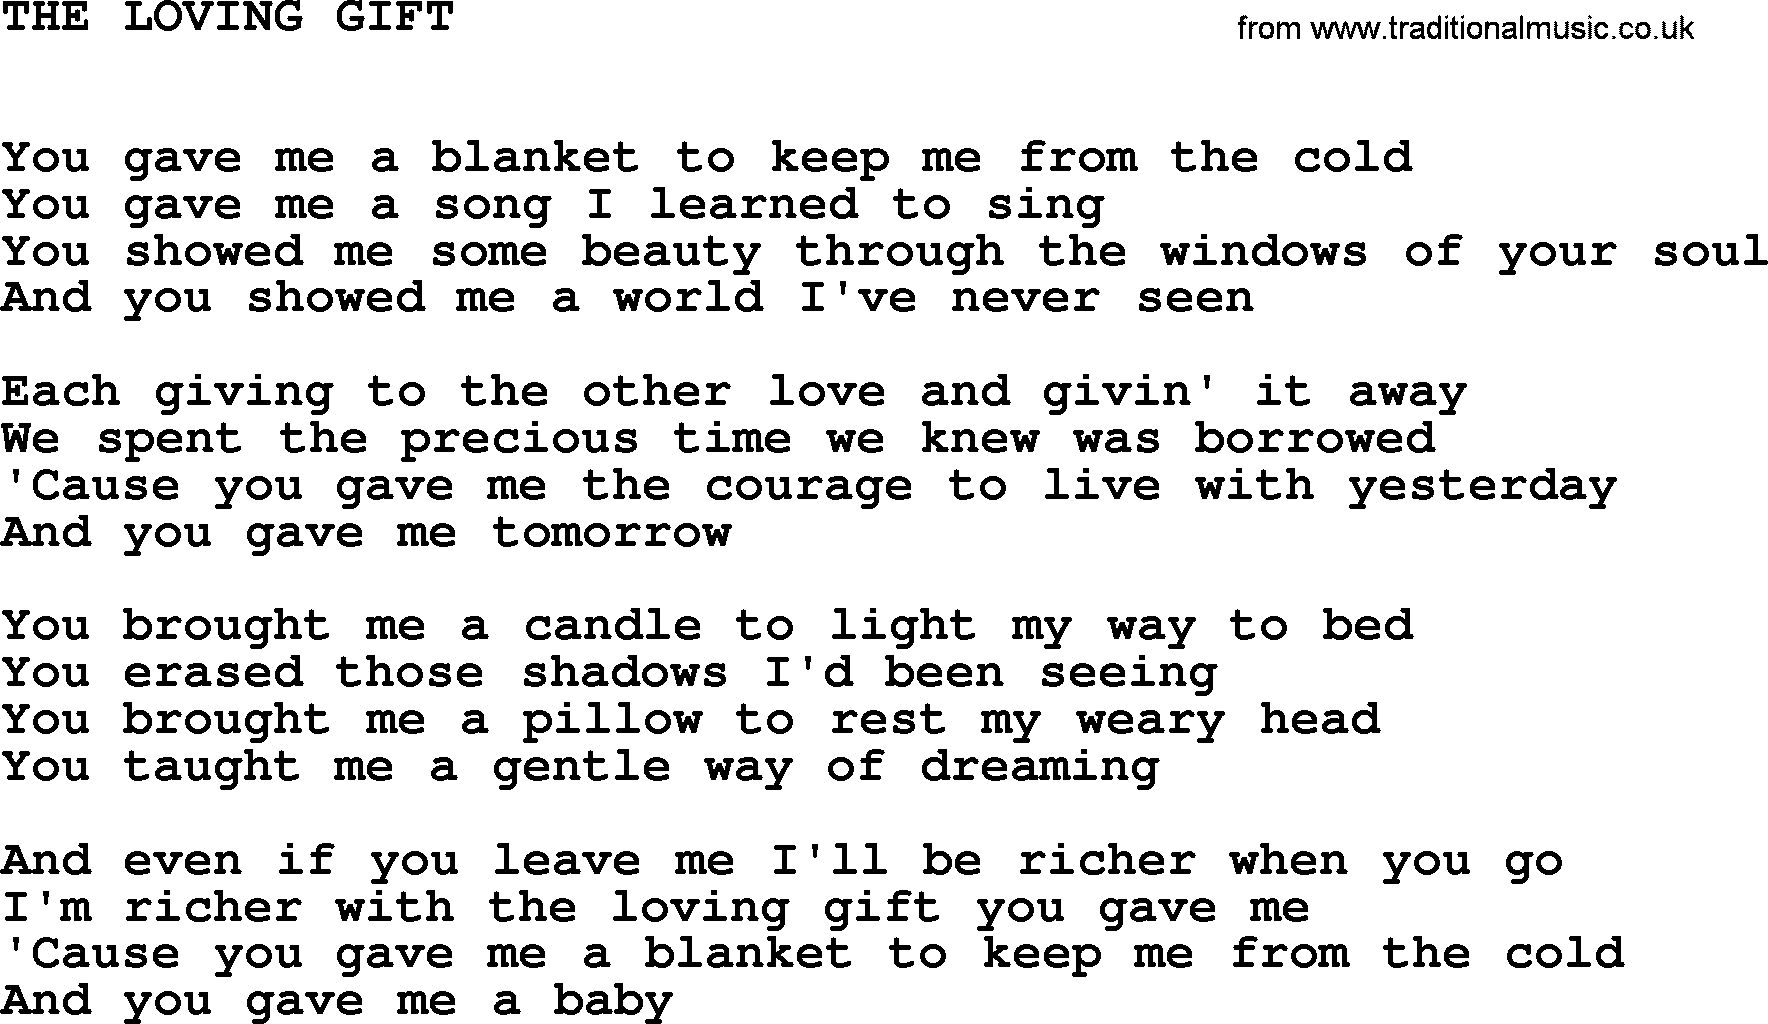 Johnny Cash song The Loving Gift.txt lyrics